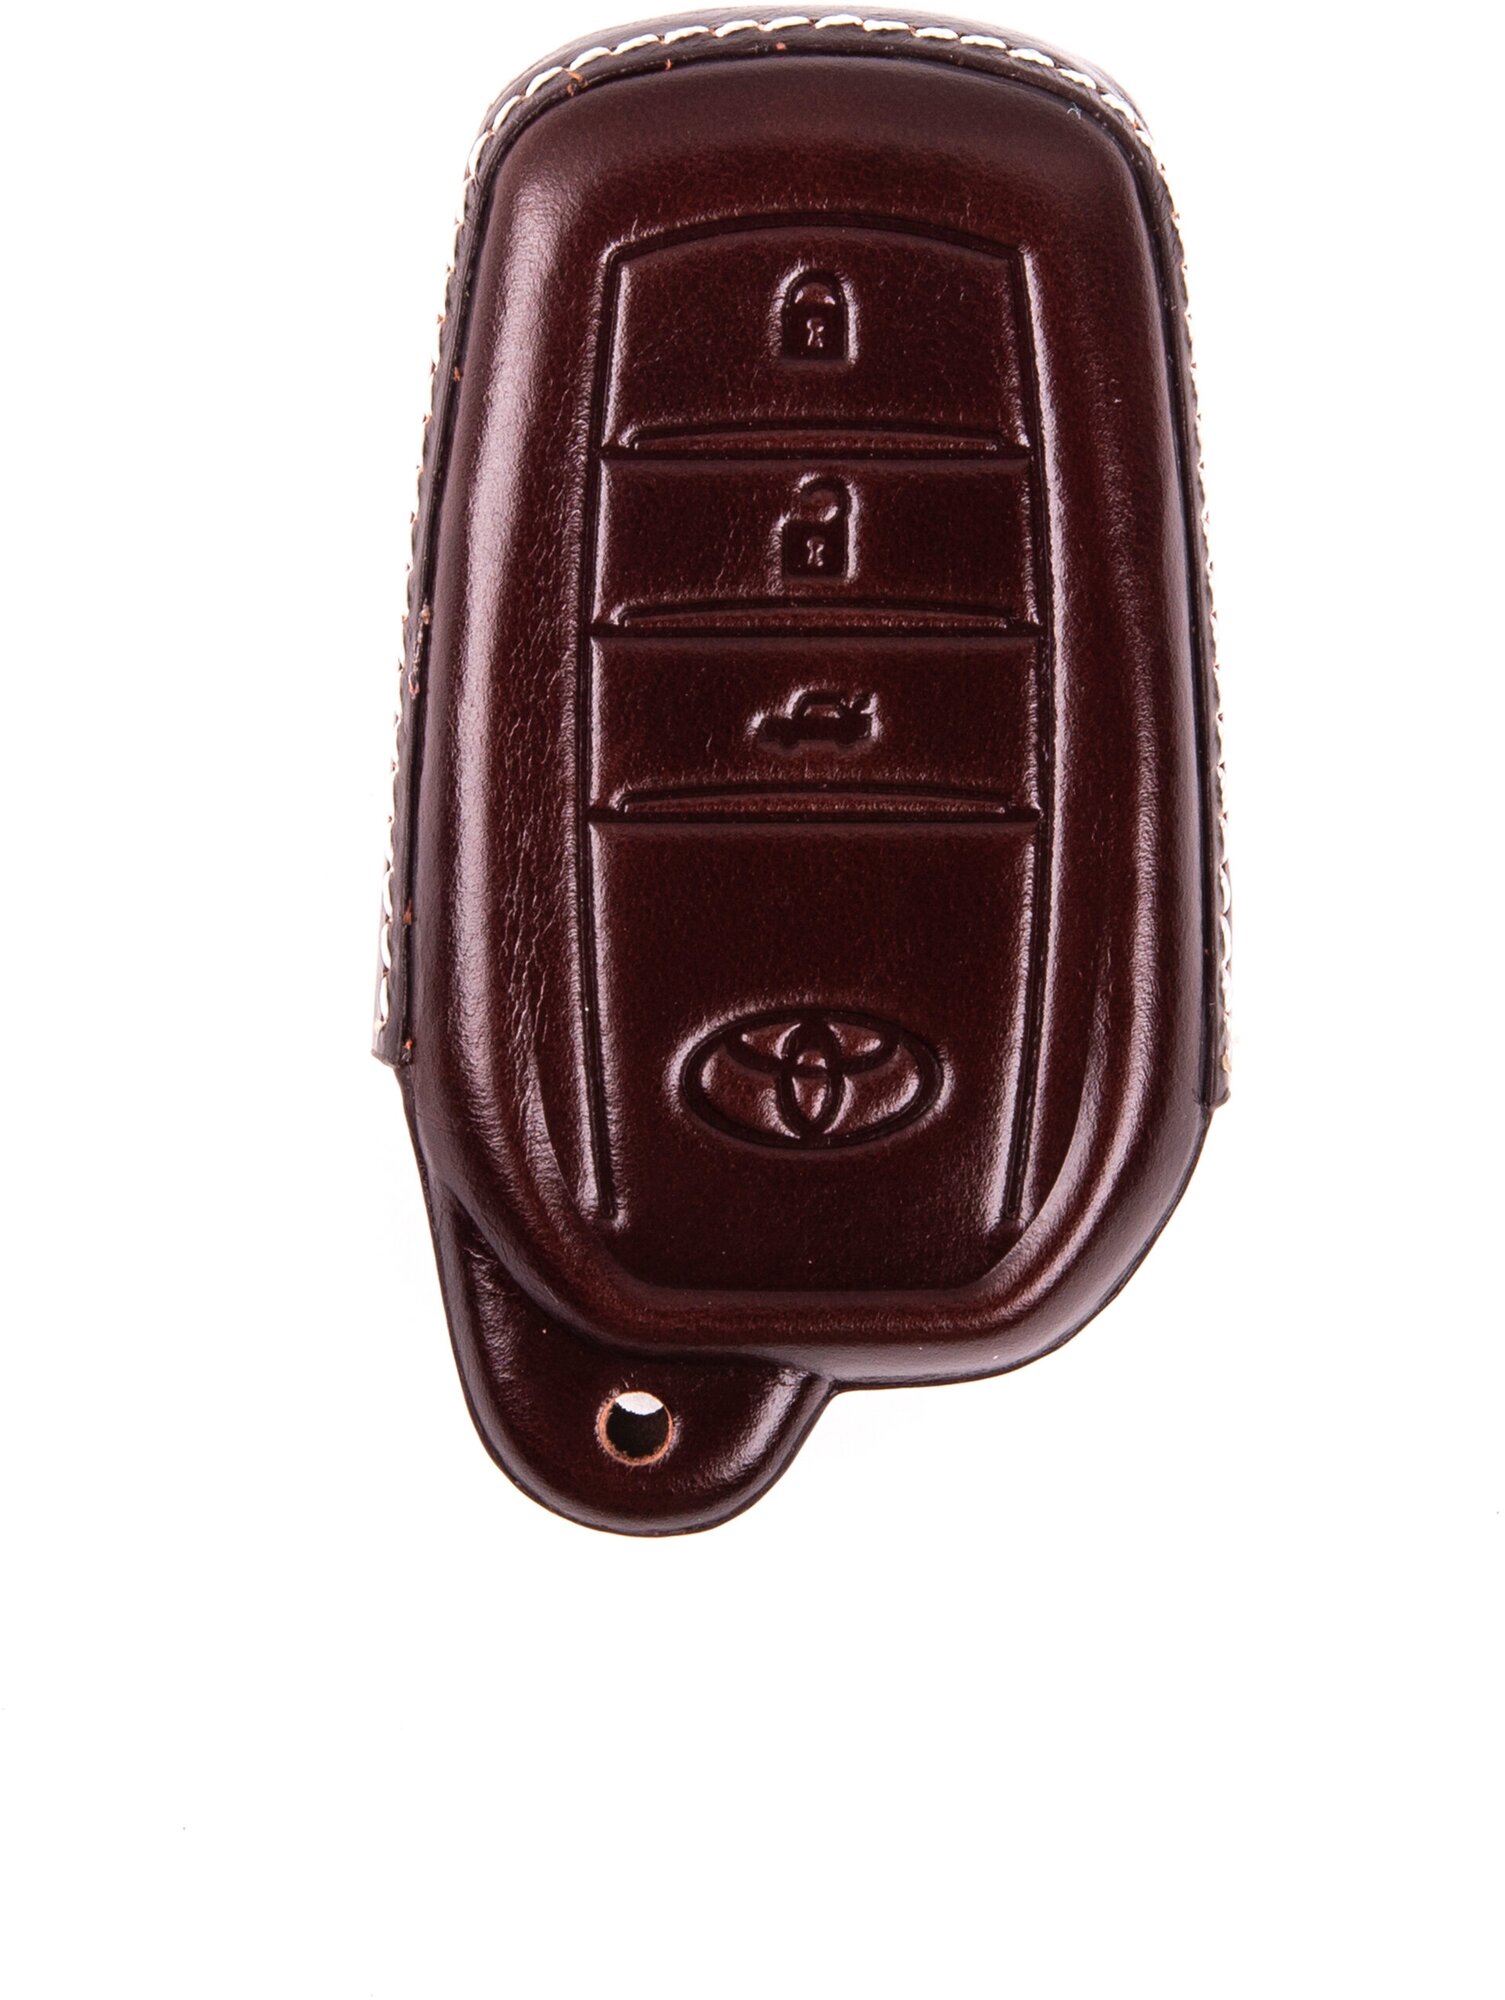 Кожаный чехол на ключ Тойота,Ленд Крузер 200, хайлюкс коричневый